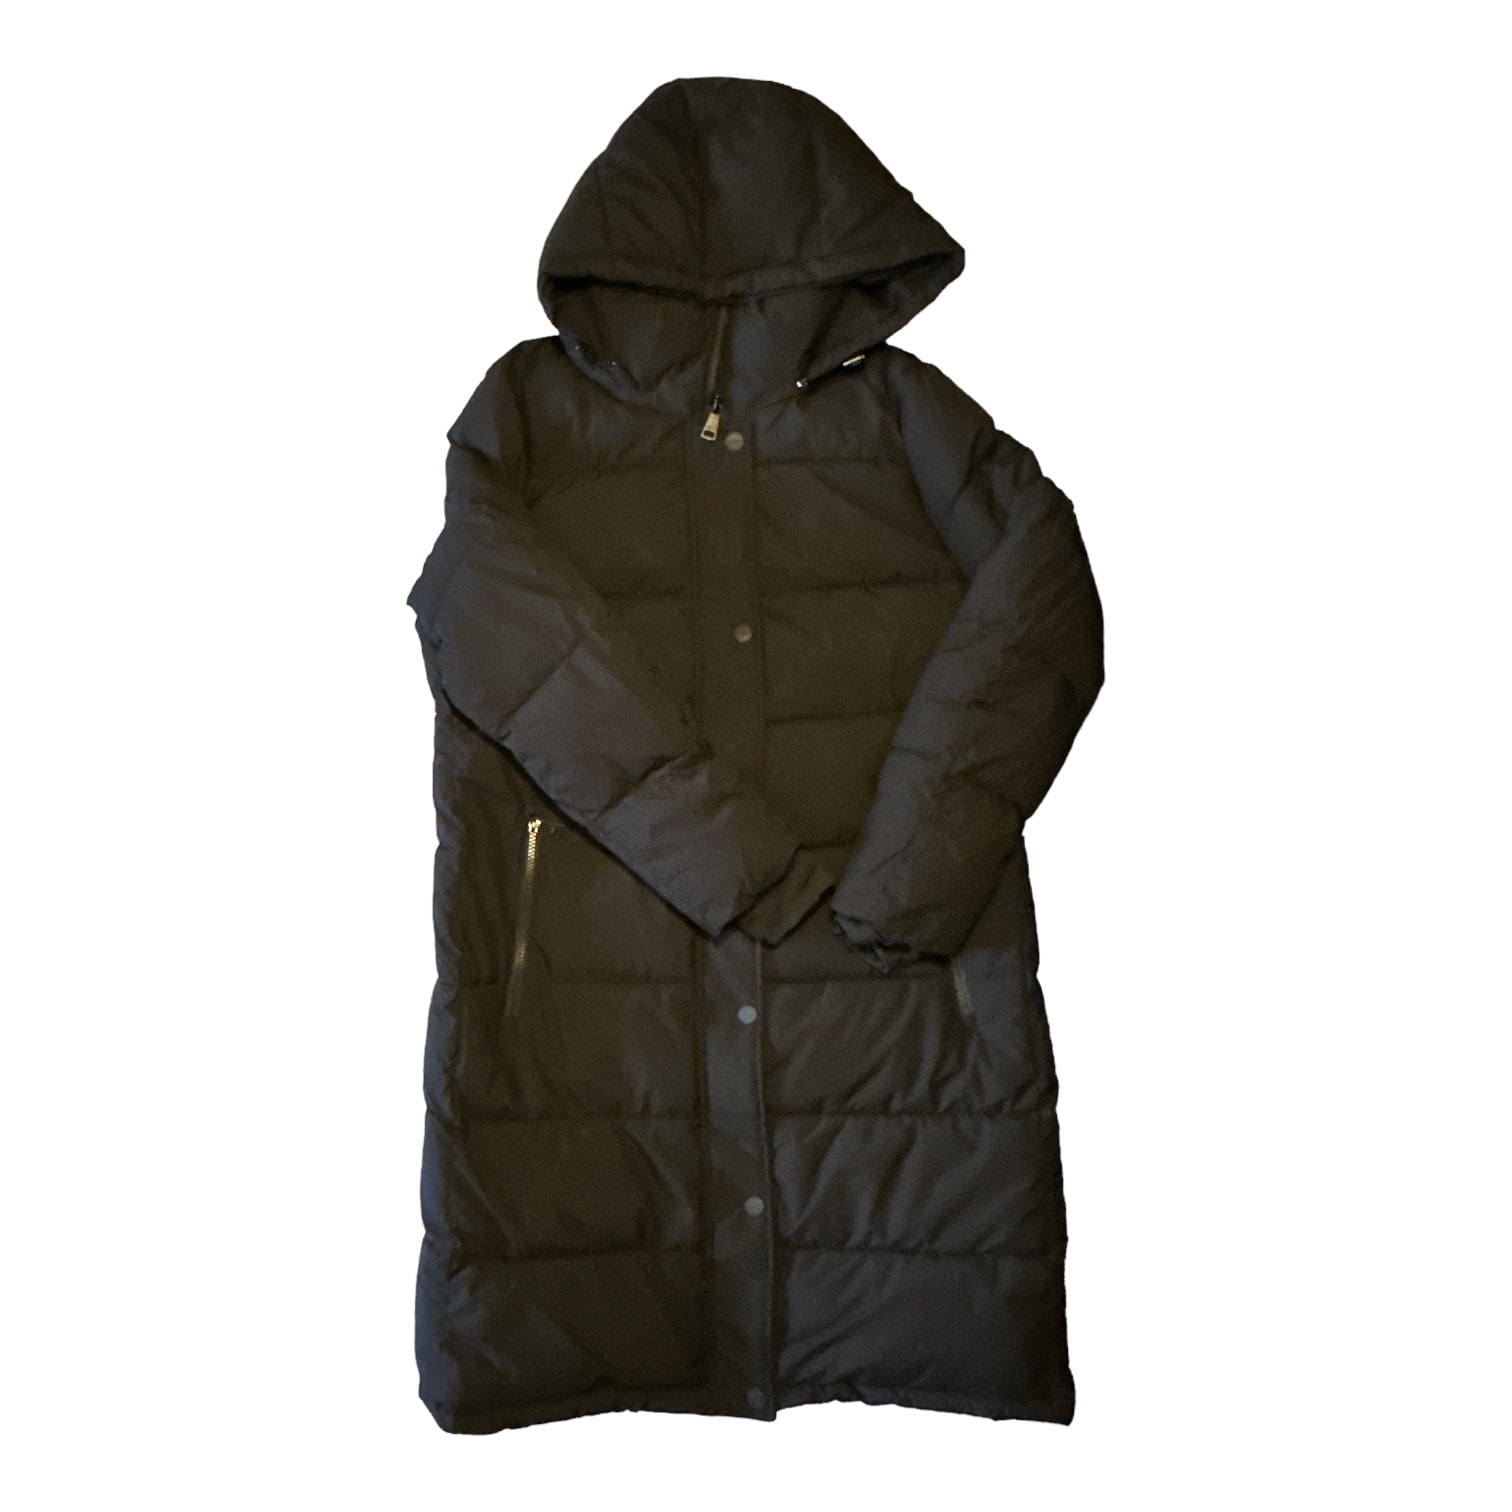 DKNY Women's Long Puffer Detachable Hooded Wind Resistant Jacket (Black, S)